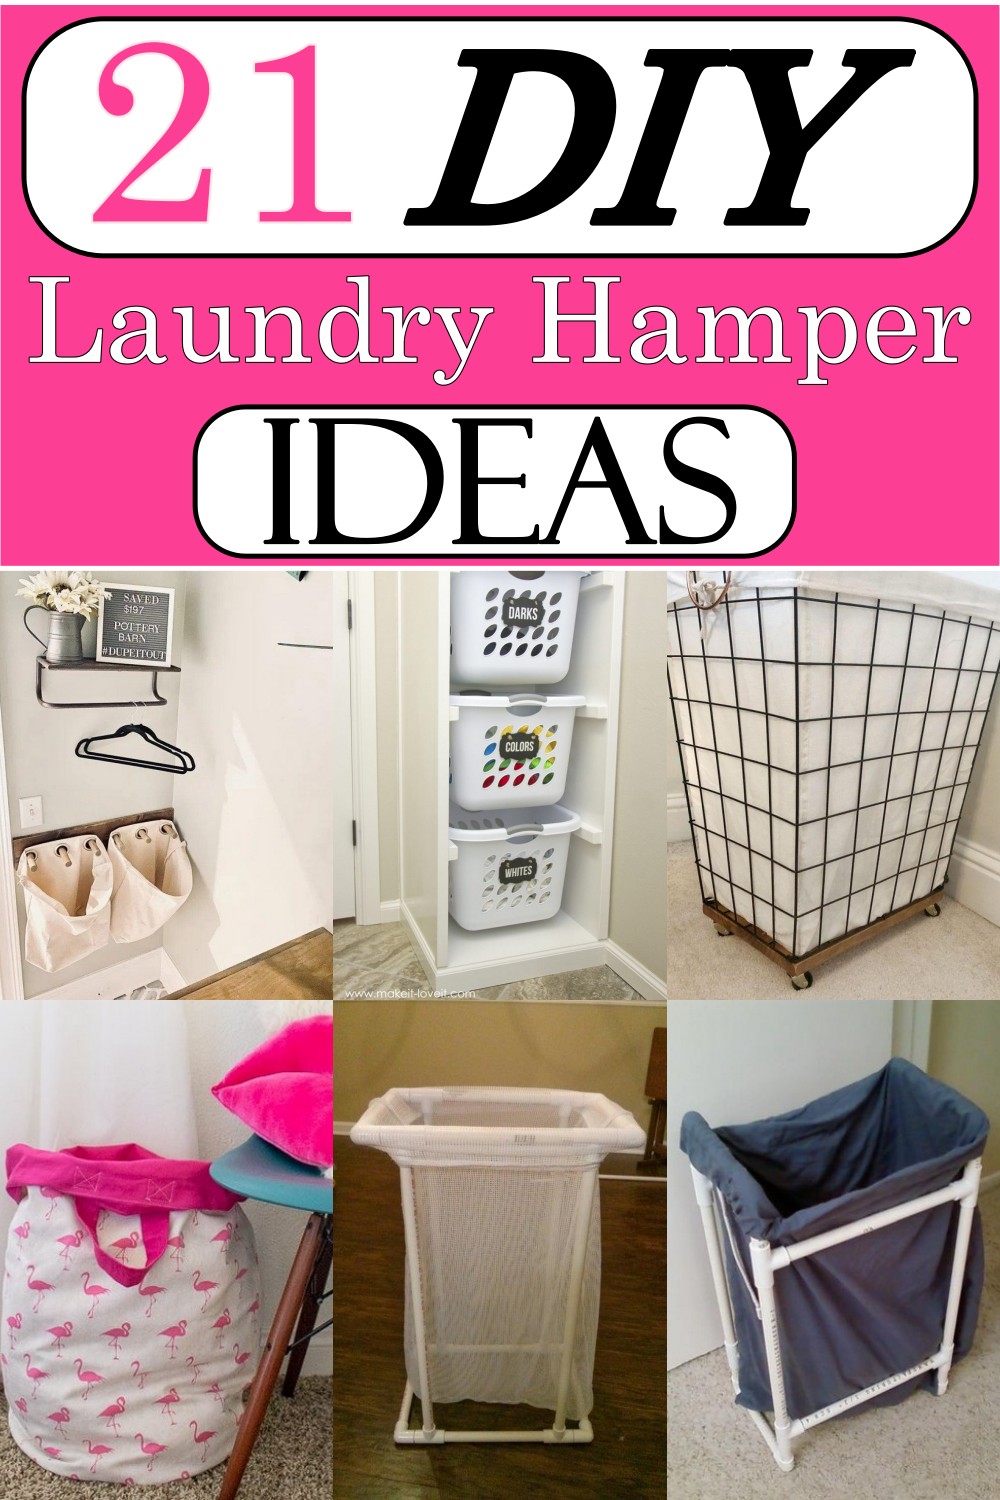 DIY Laundry Hamper Ideas